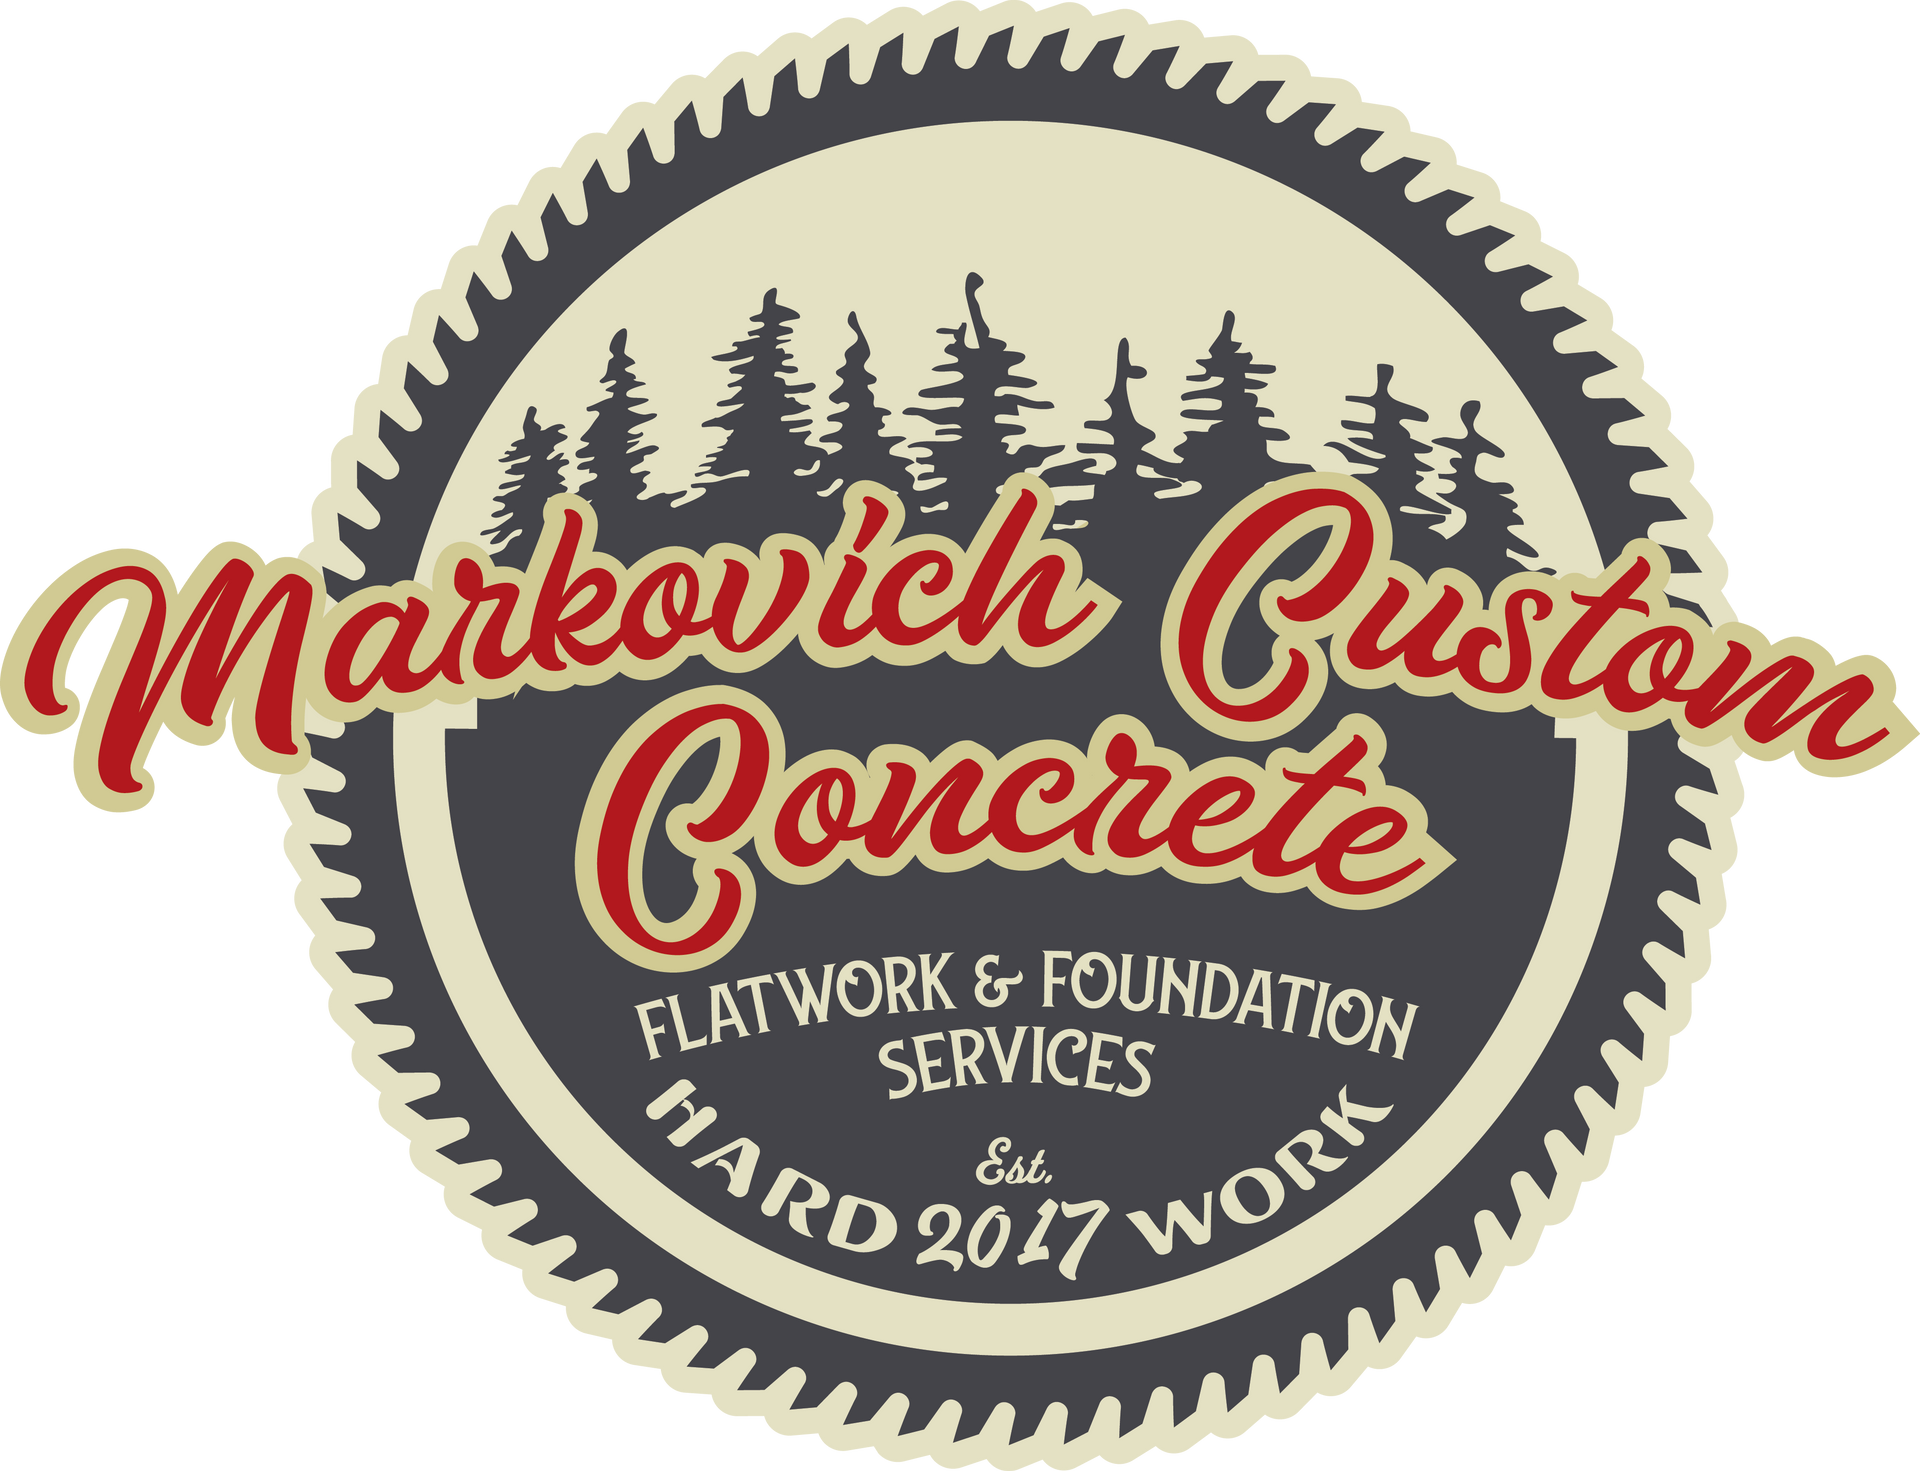 Markovich Custom Concrete, LLC